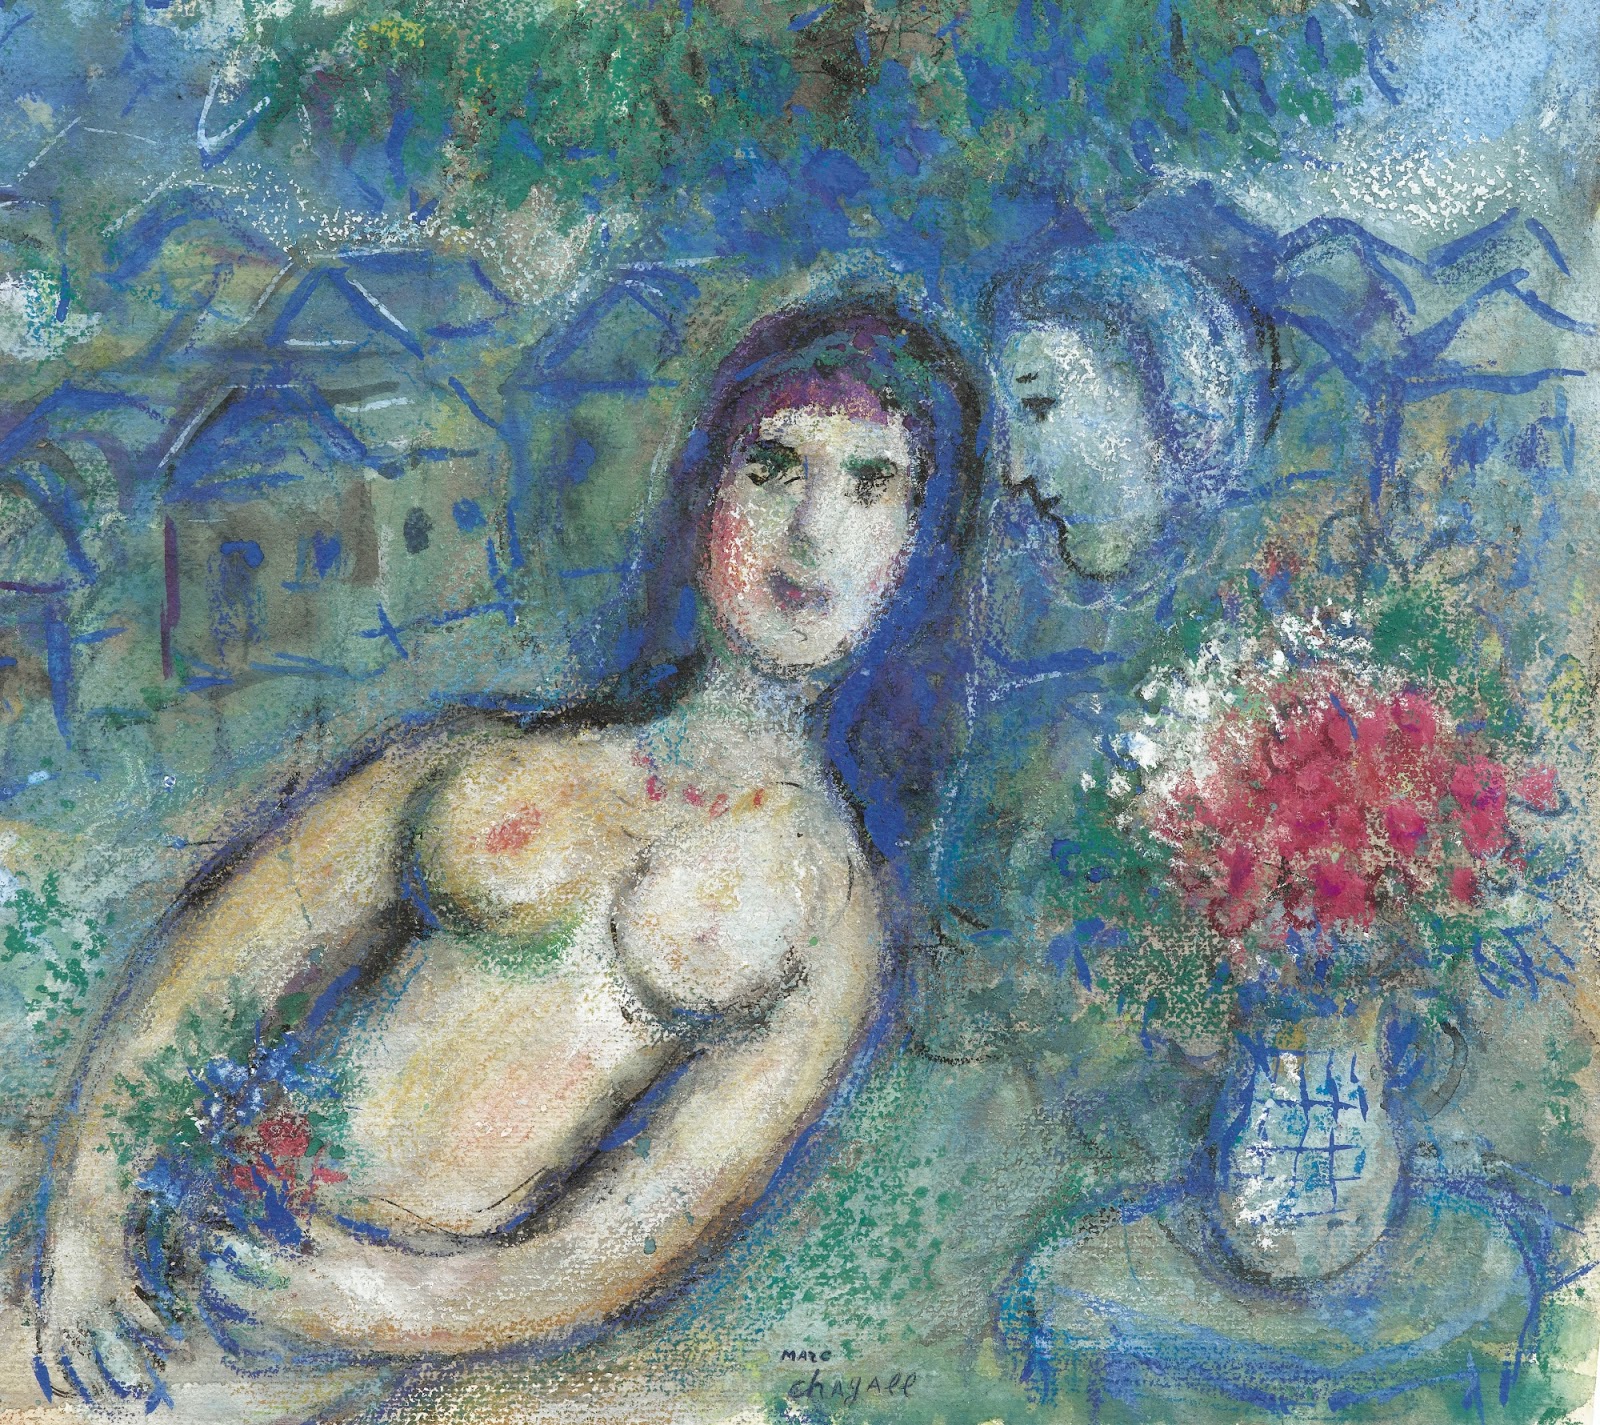 Marc+Chagall-1887-1985 (399).jpg